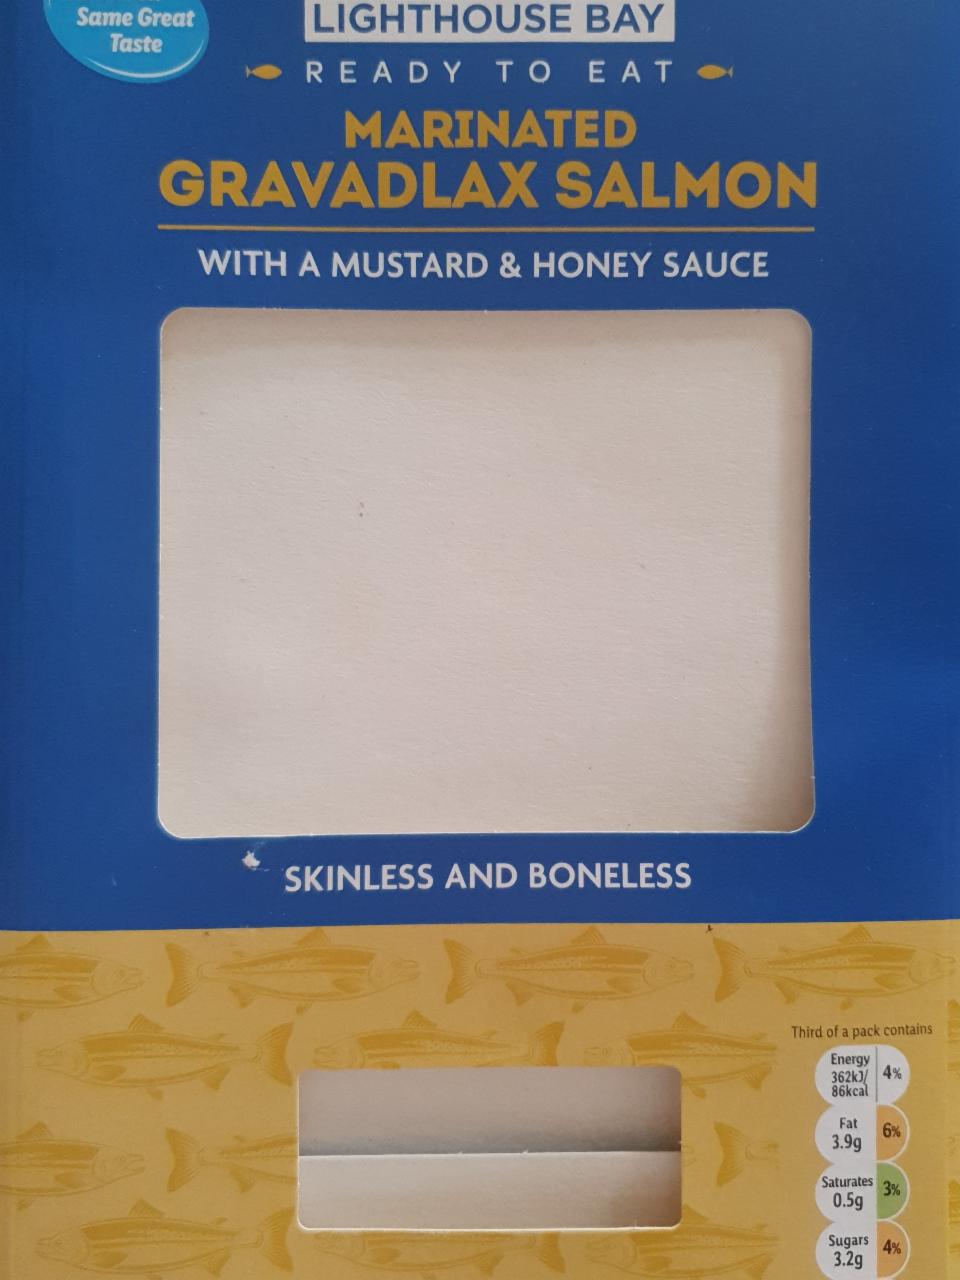 Photo - Marinated Gravadlax Salmon with mustard & honey sauce Lighthouse Bay